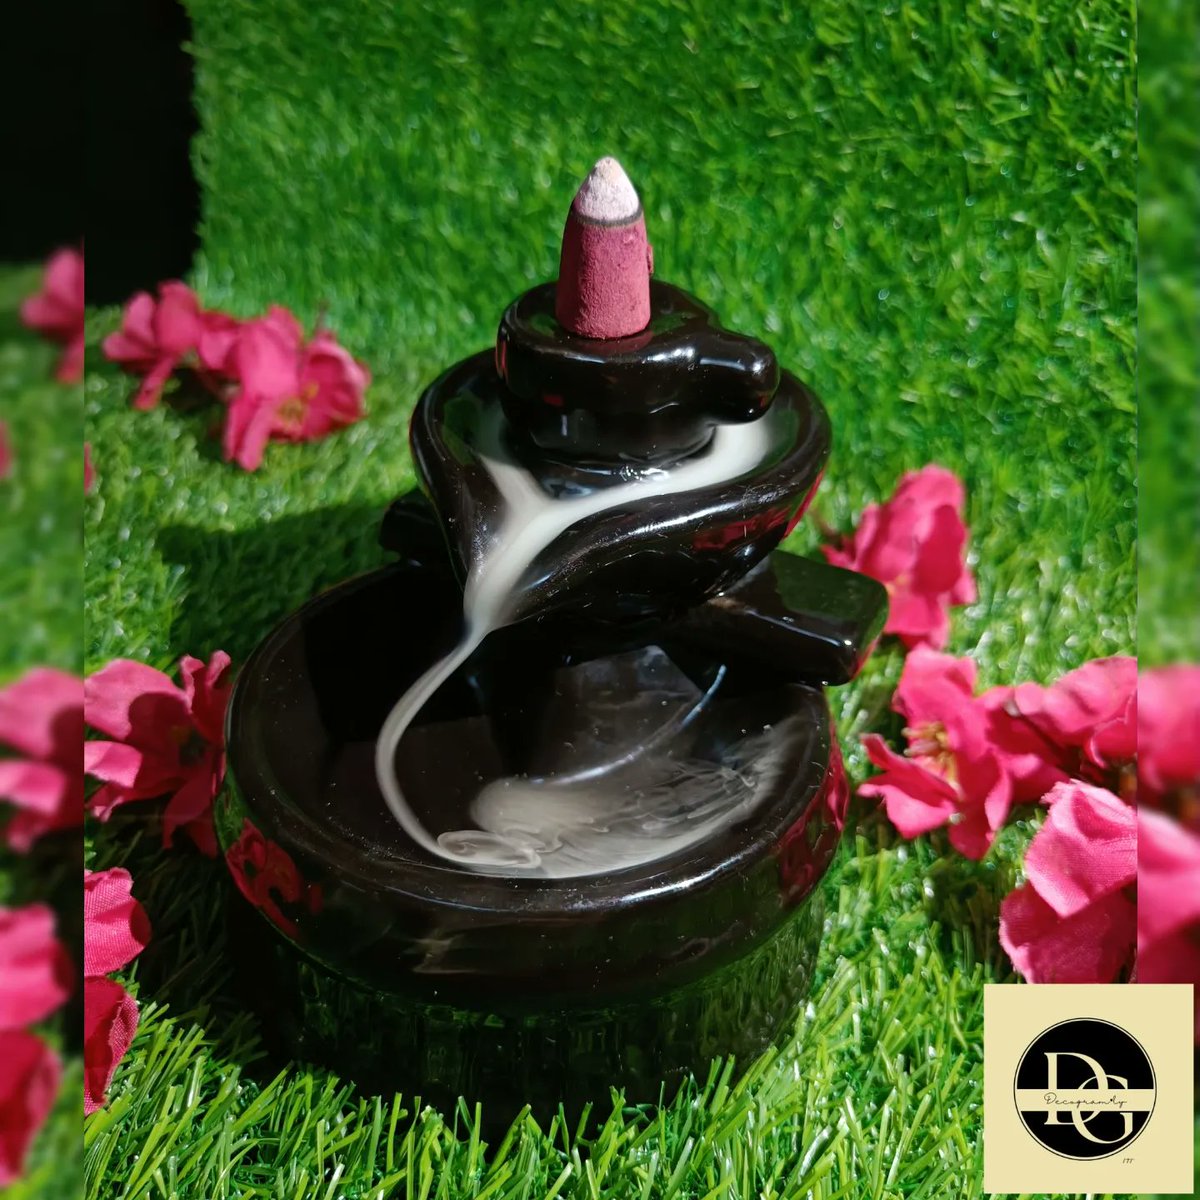 Premium quality ceramic black shivling smoke fountain ⛲ ,✨
Weighs around 300gms
Measurement: 10-12cm
#home #decor #gift #shiv #shivling #MSDhoni #iplopeningceremony #JioCinema #zendaya #ManishSisodia #IPLonJioCinema #IPL2023 #ArijitSingh #RashmikaMandanna